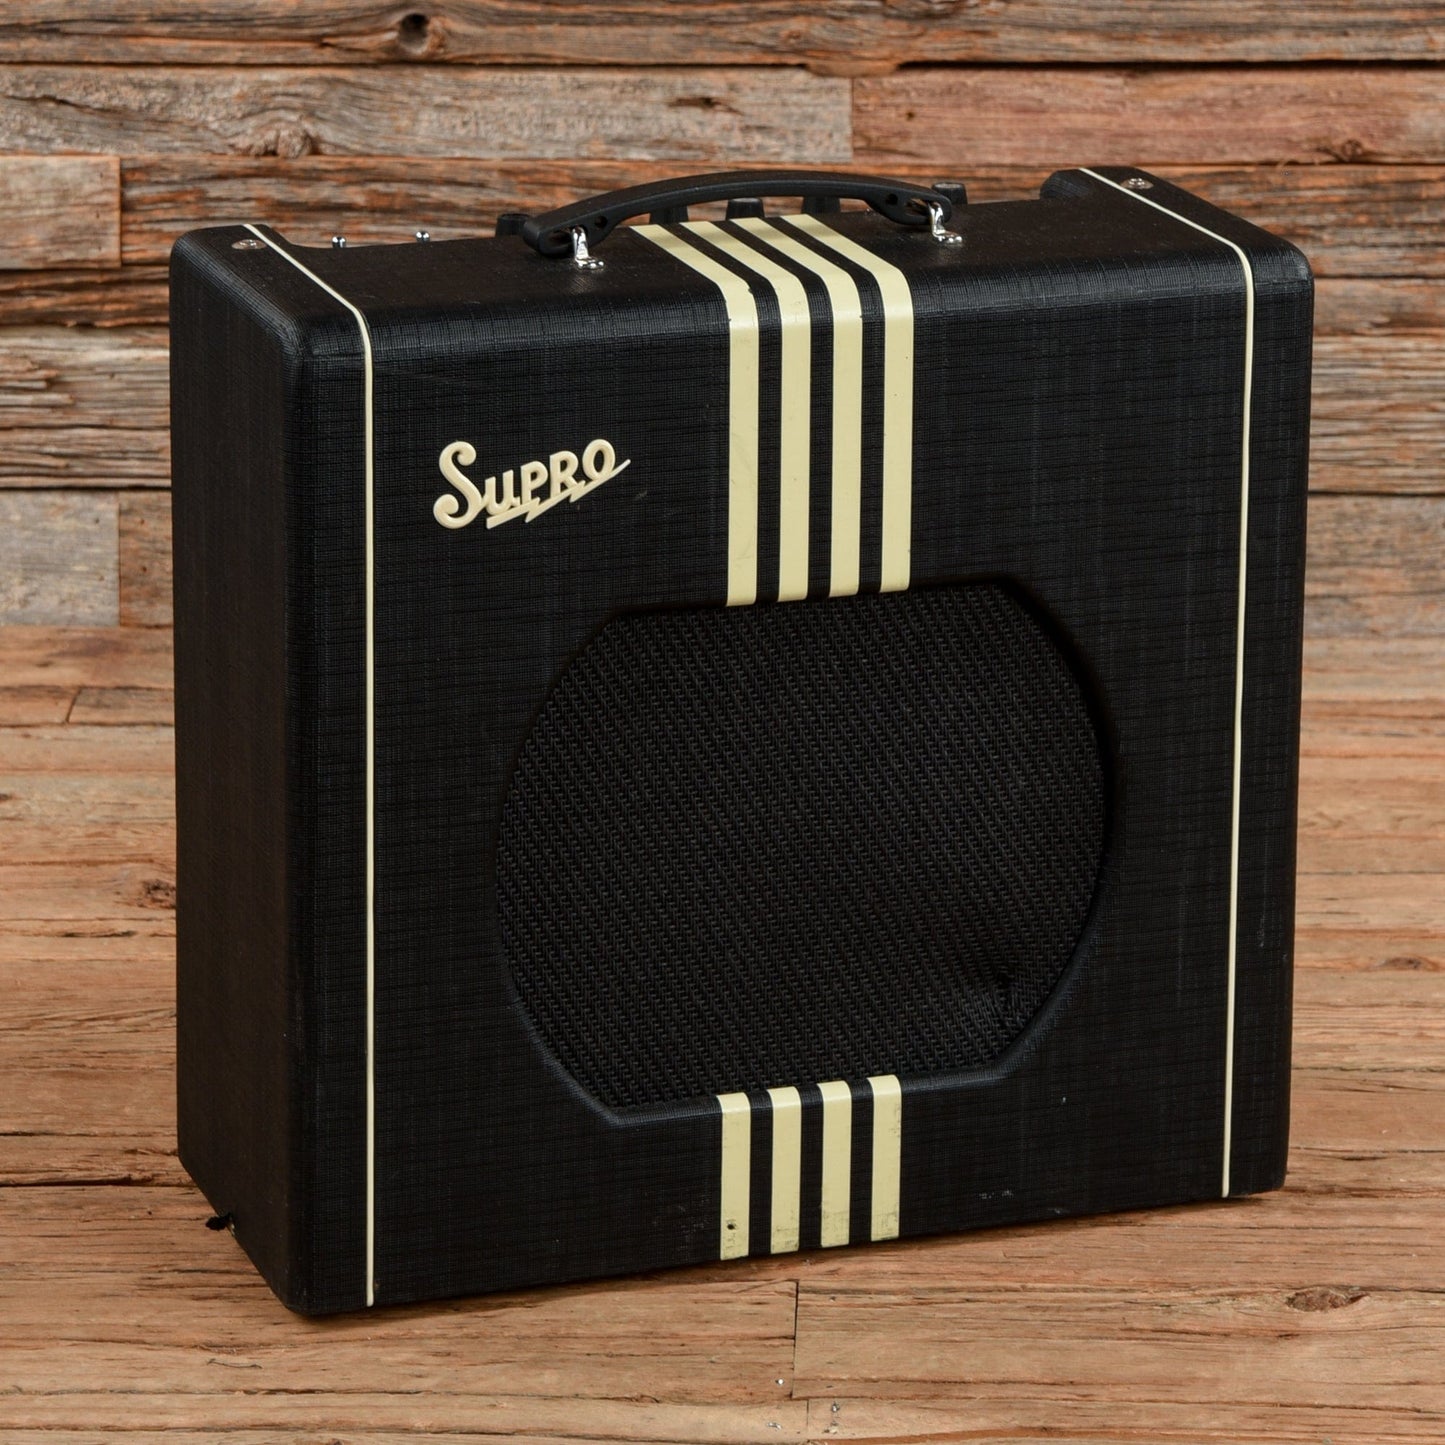 Supro 1822R Delta King 12 15-Watt 1x12" Guitar Combo Amps / Guitar Cabinets